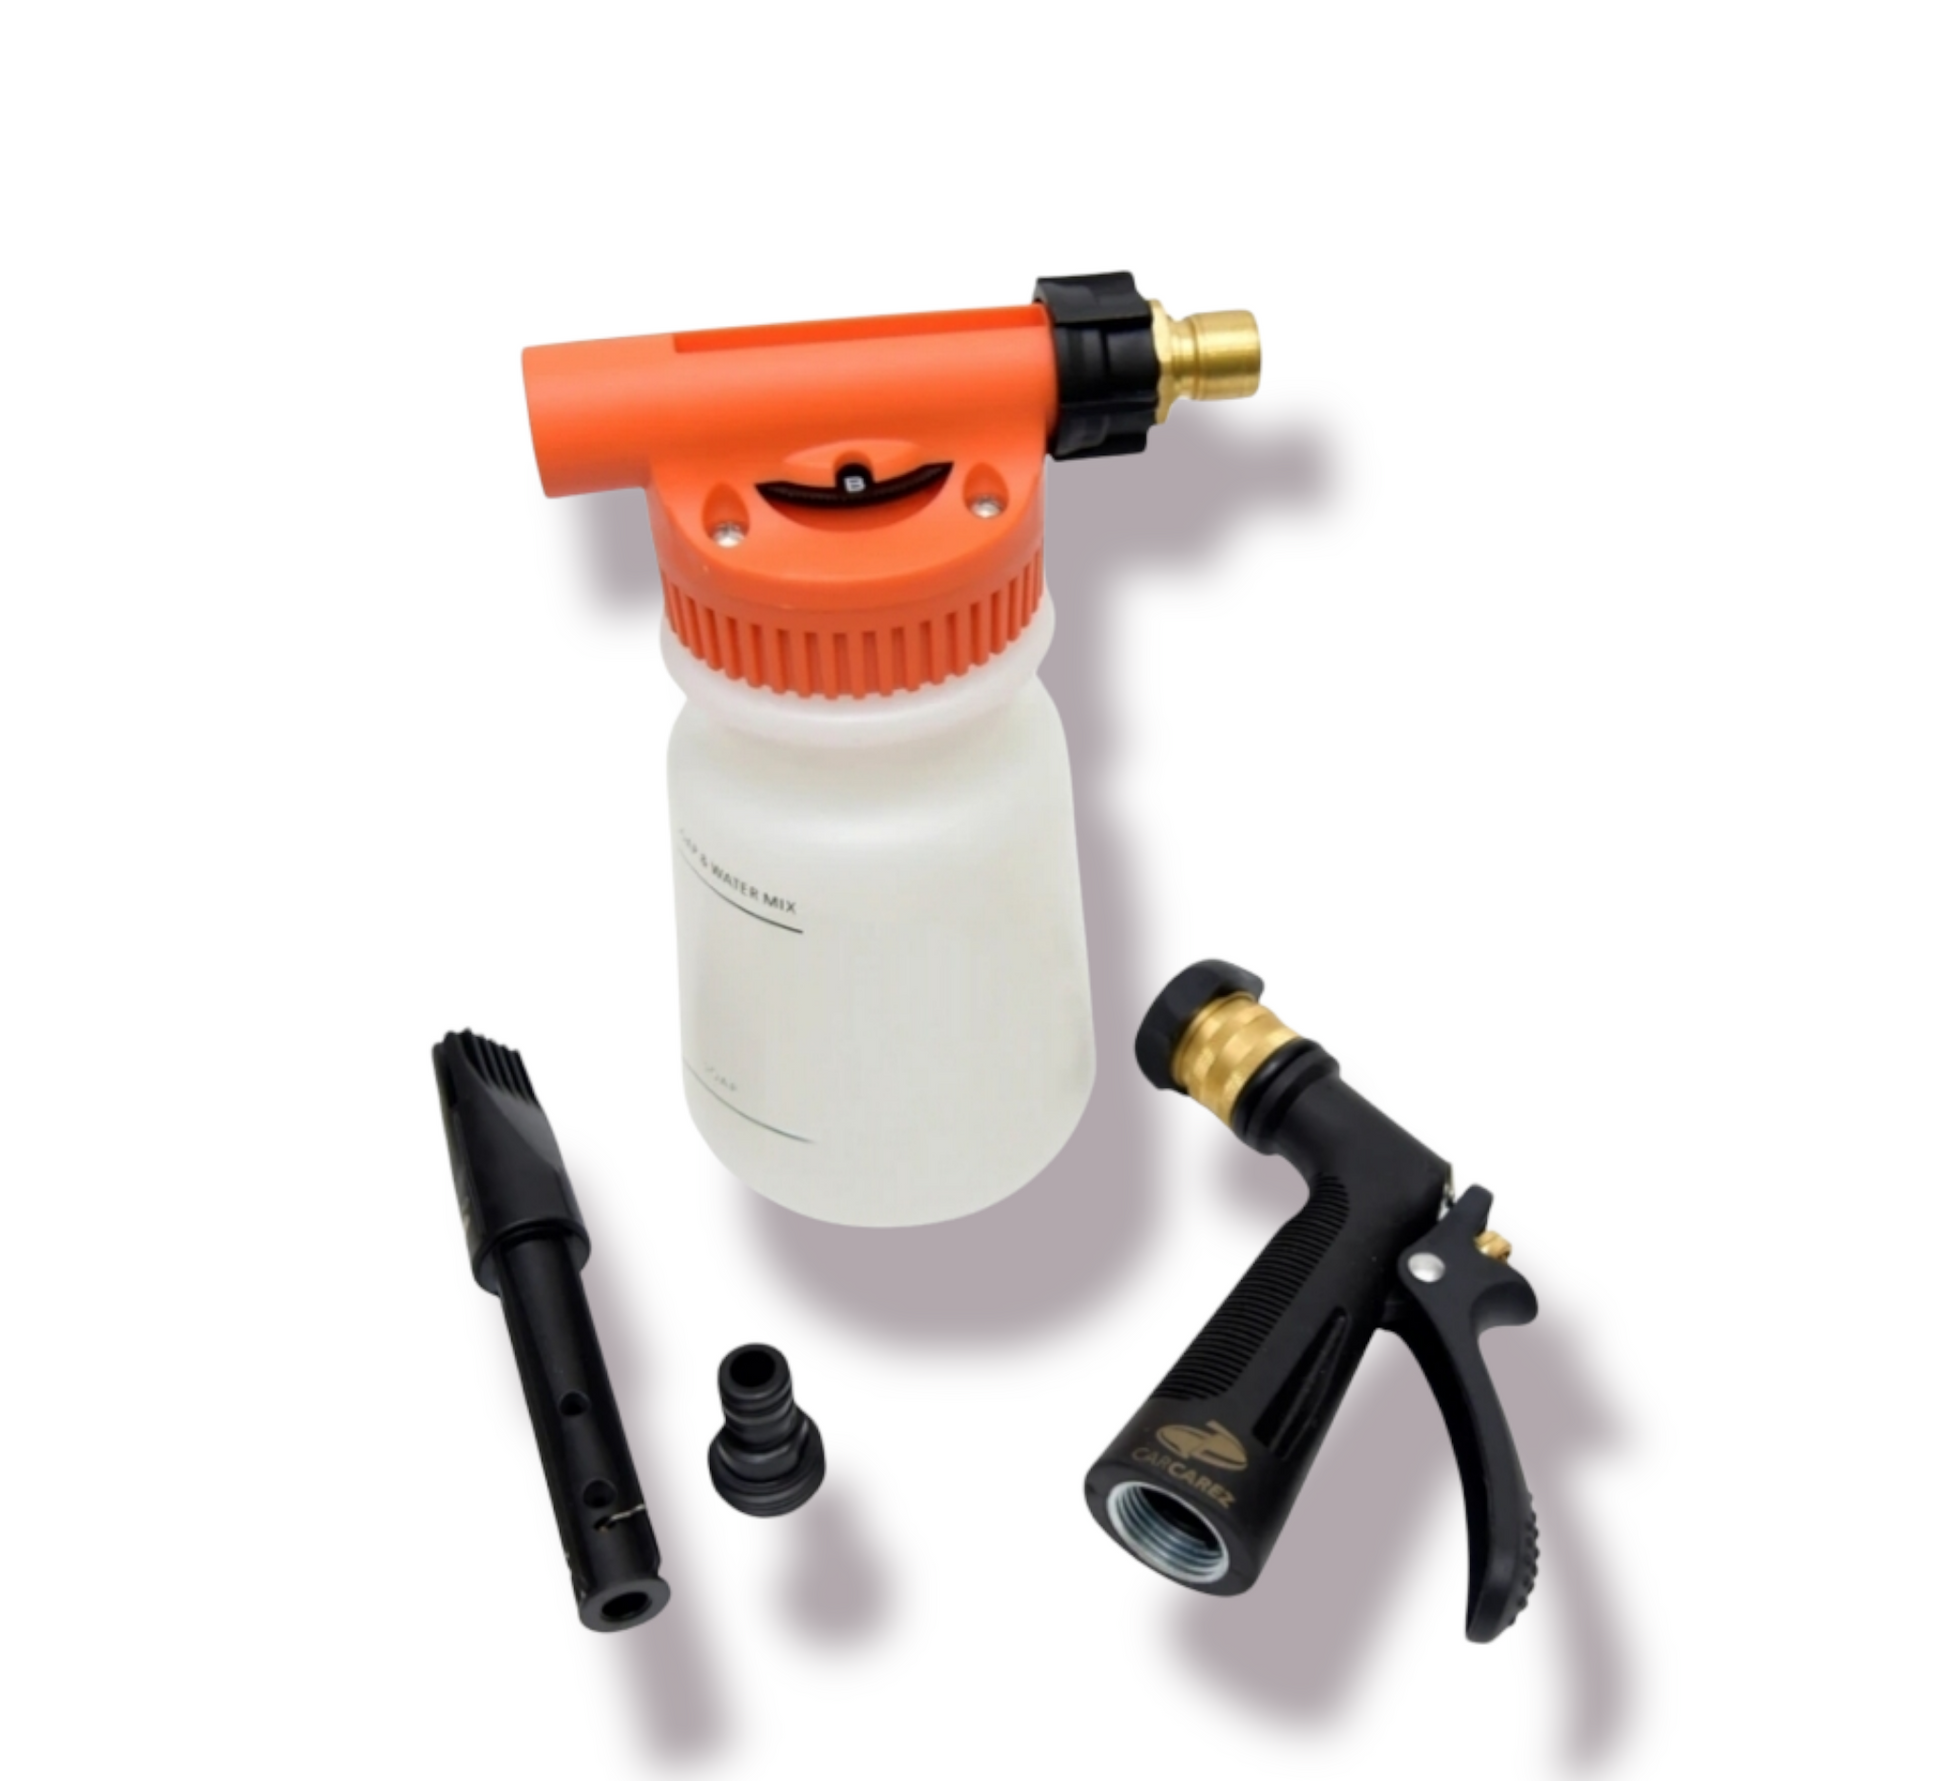  SudMagic Foam Cannon for Garden Water Hose - Car Wash Foam Gun  Soap Foaming Sprayer Nozzle Kit - Assembled in USA : Patio, Lawn & Garden